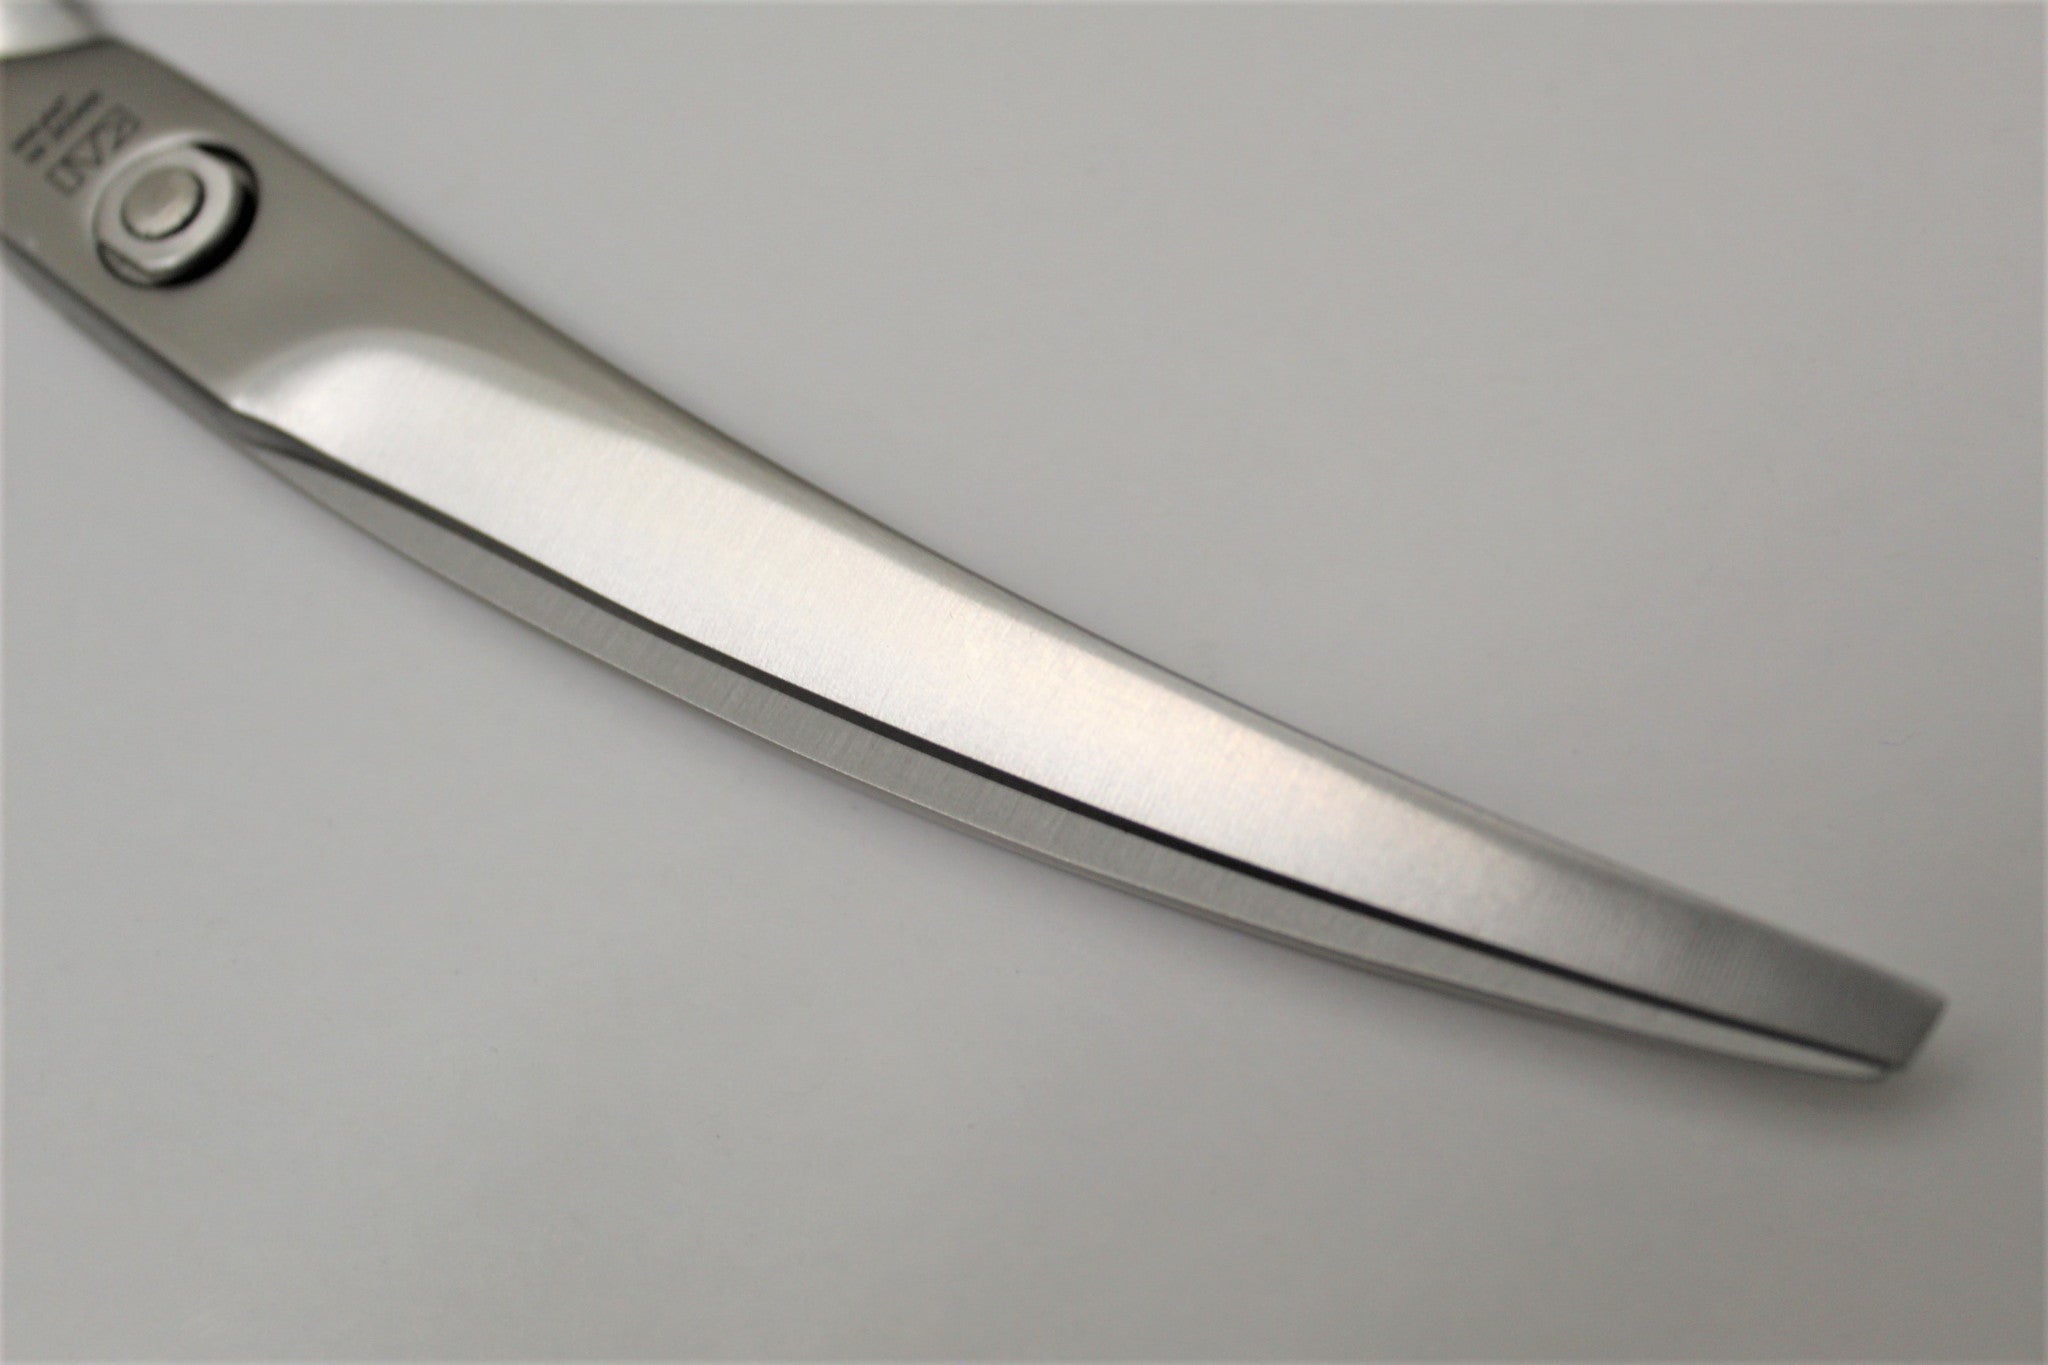 Kai DH-3346: 8 3/4-inch Curved Kitchen Shears - KAI Scissors